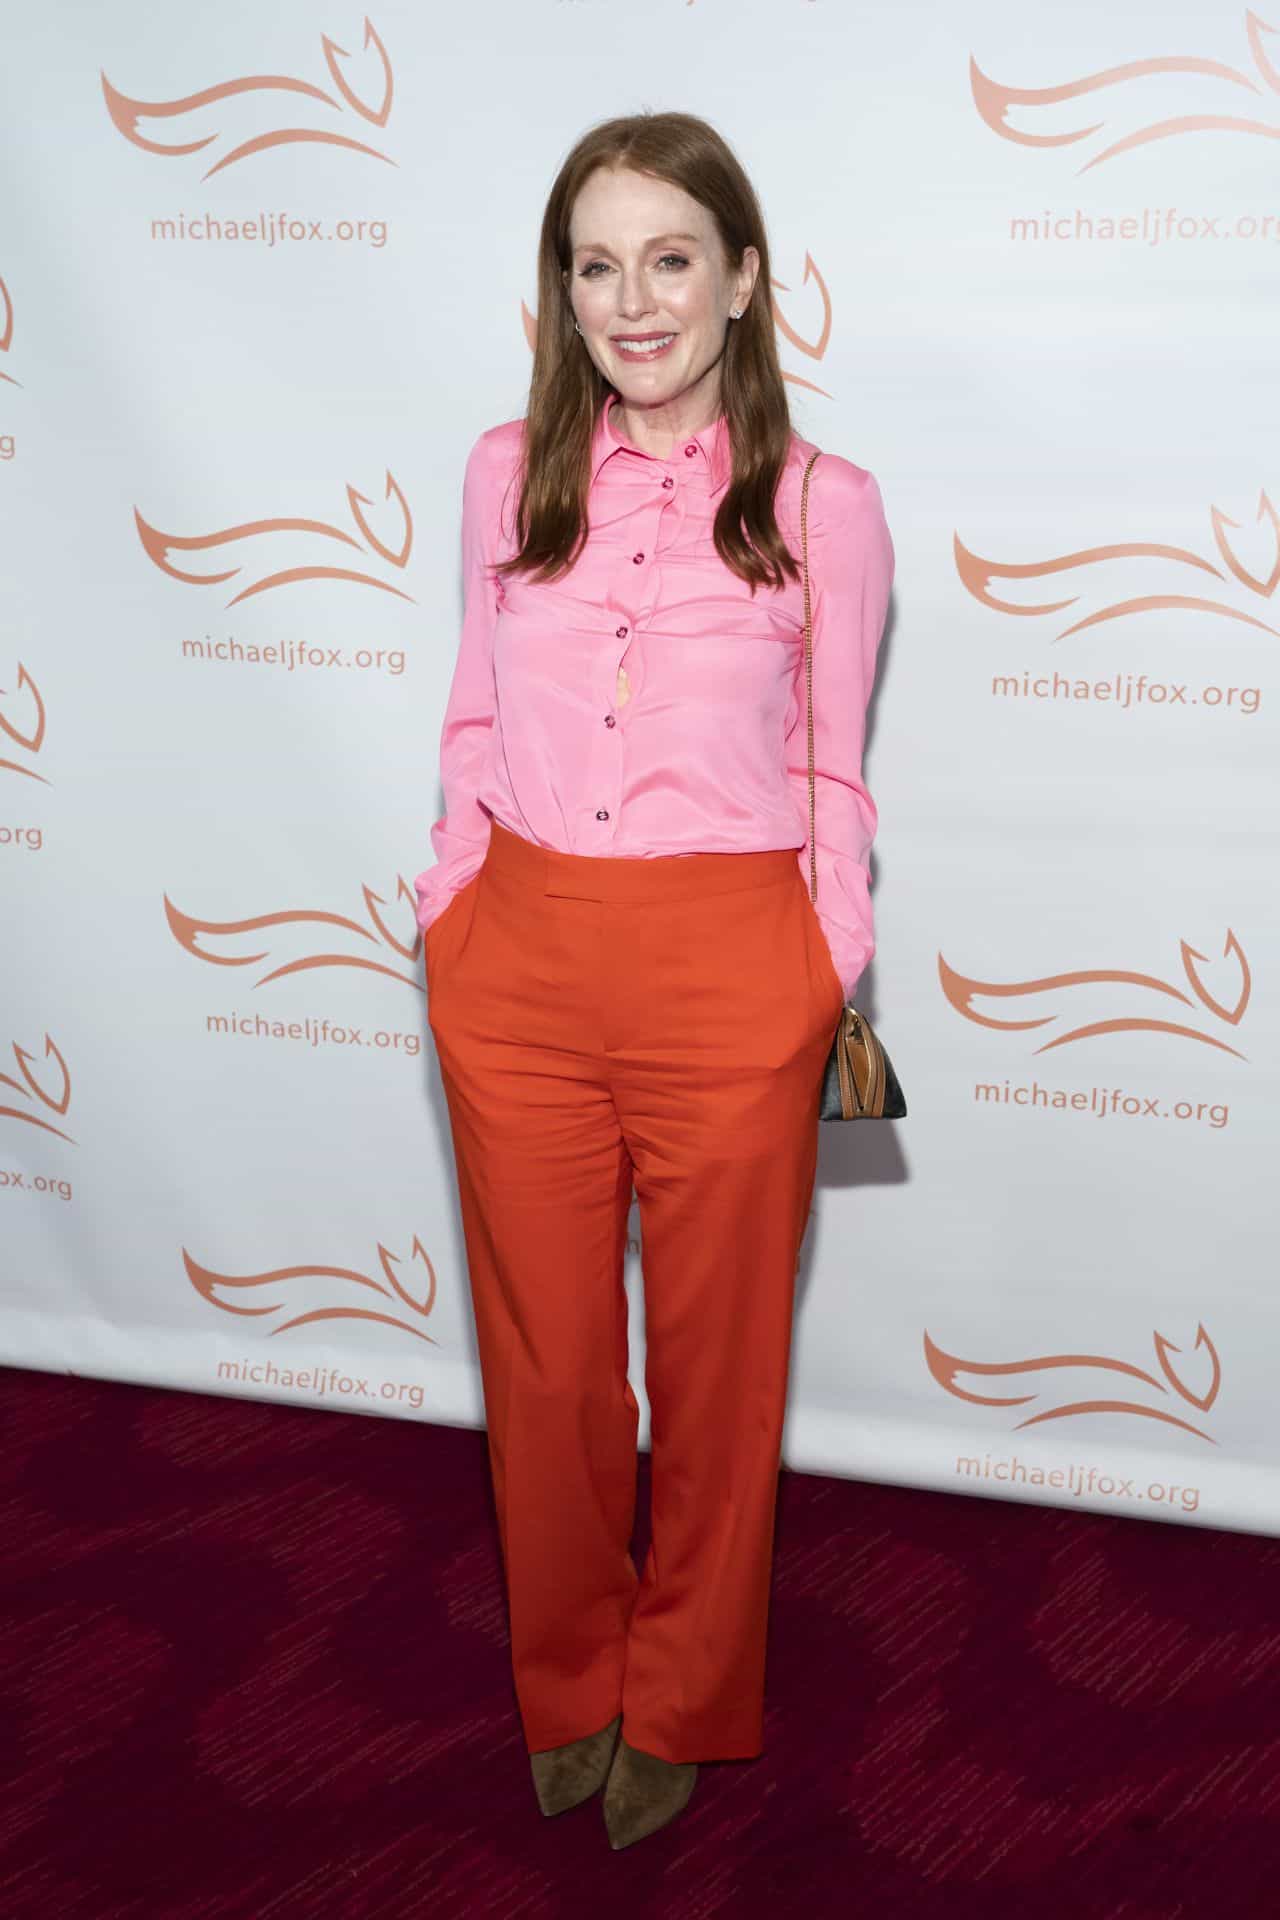 Julianne Moore Looks Modish at 2021 Michael J. Fox’s Glitzy Foundation Gala